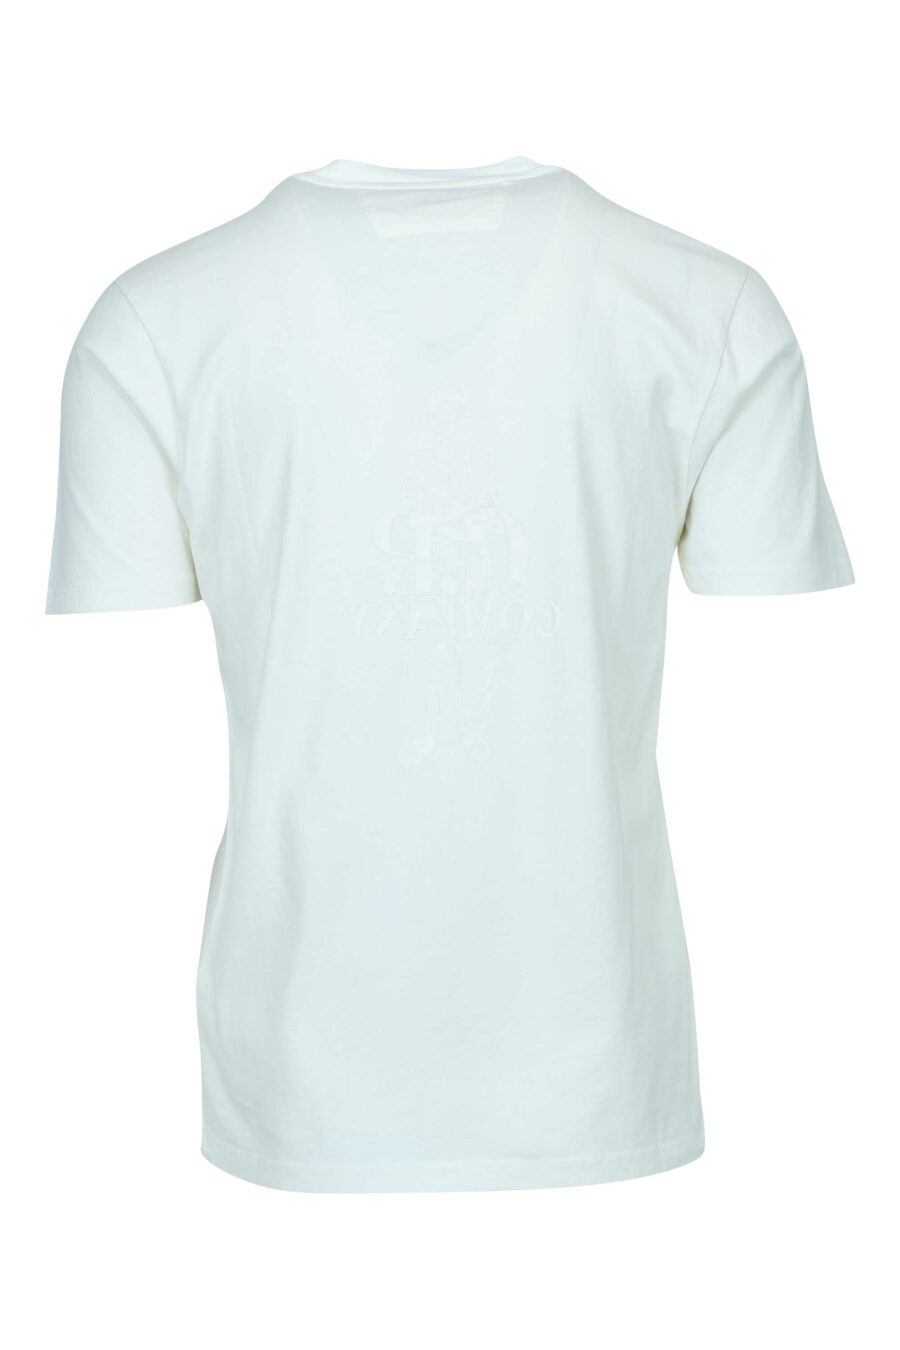 T-shirt blanc avec maxilogue marin et logo "cp" - 7620943776478 1